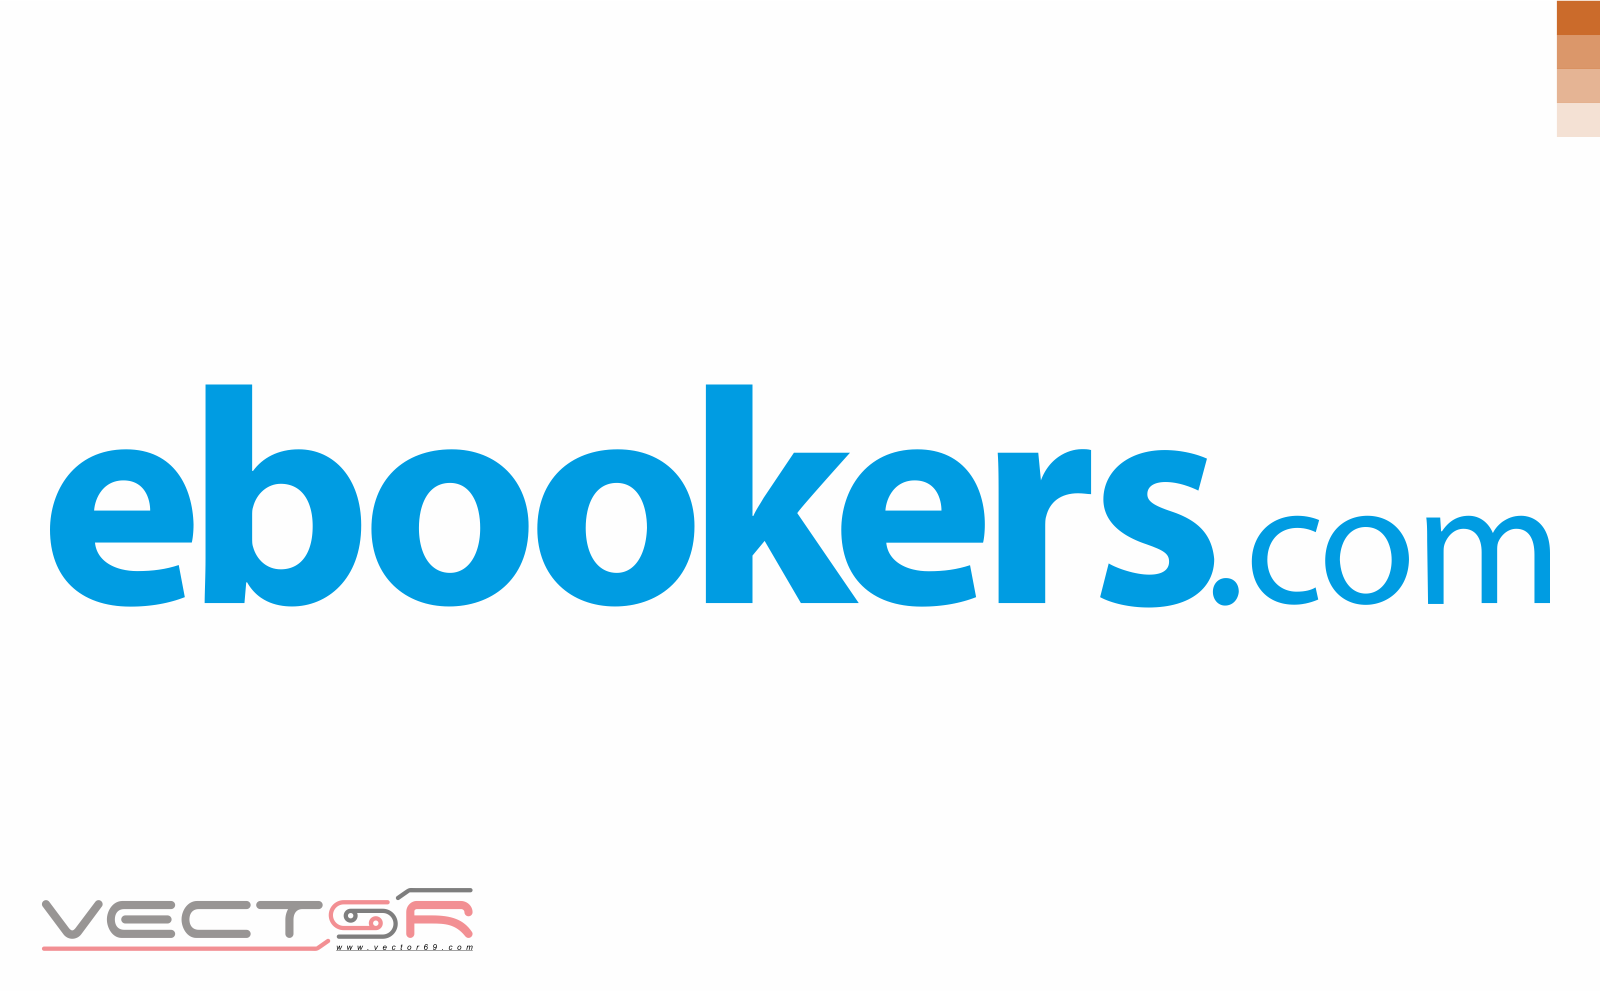 ebookers.com Logo - Download Vector File AI (Adobe Illustrator)